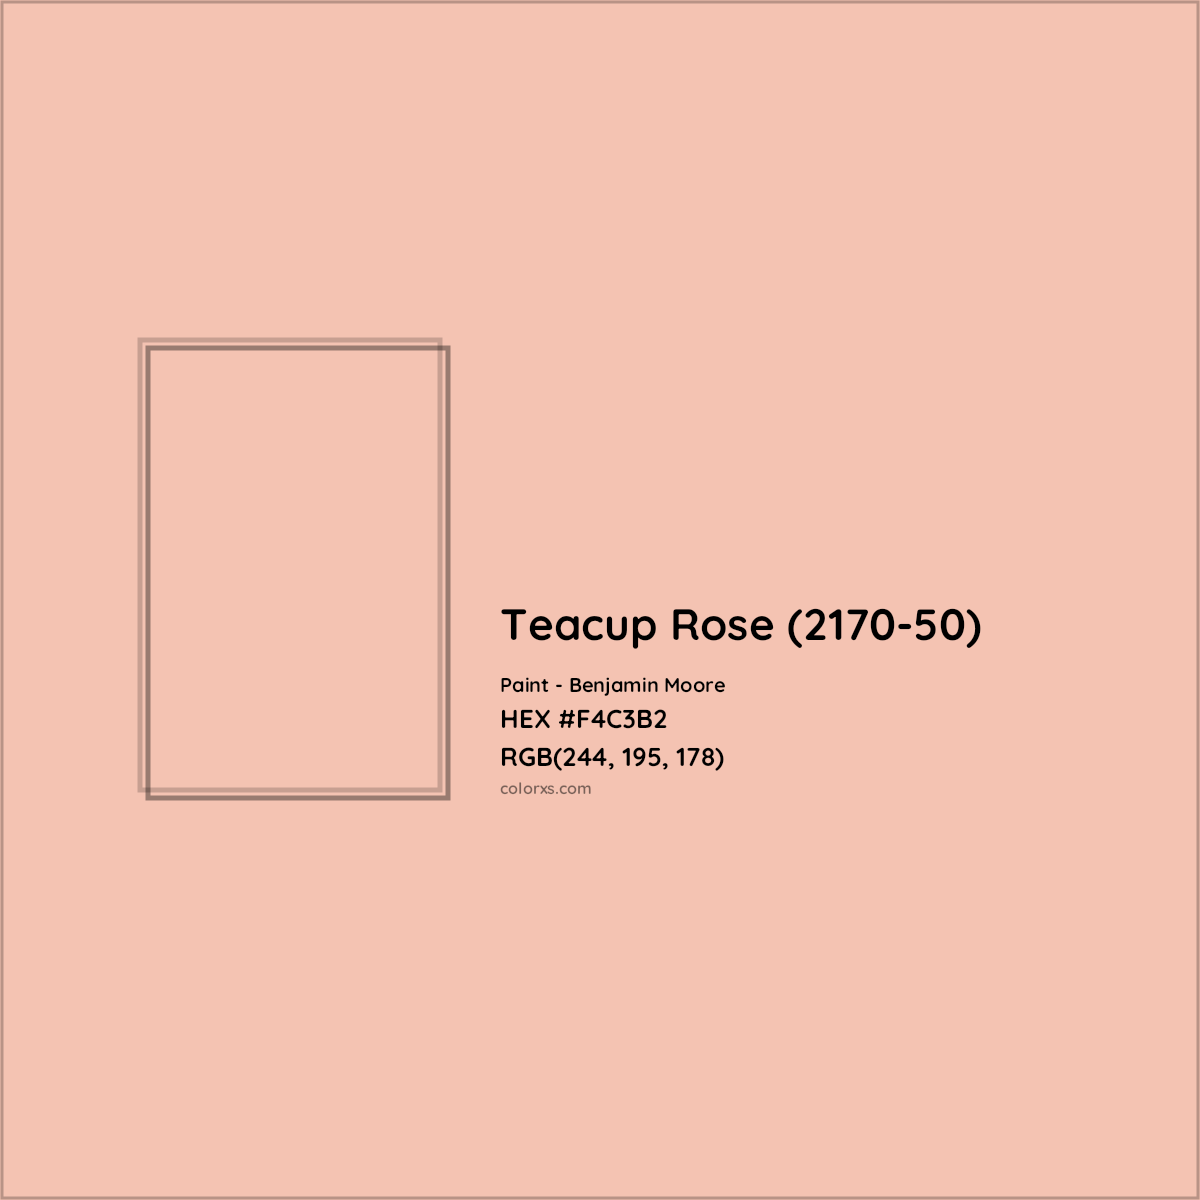 HEX #F4C3B2 Teacup Rose (2170-50) Paint Benjamin Moore - Color Code